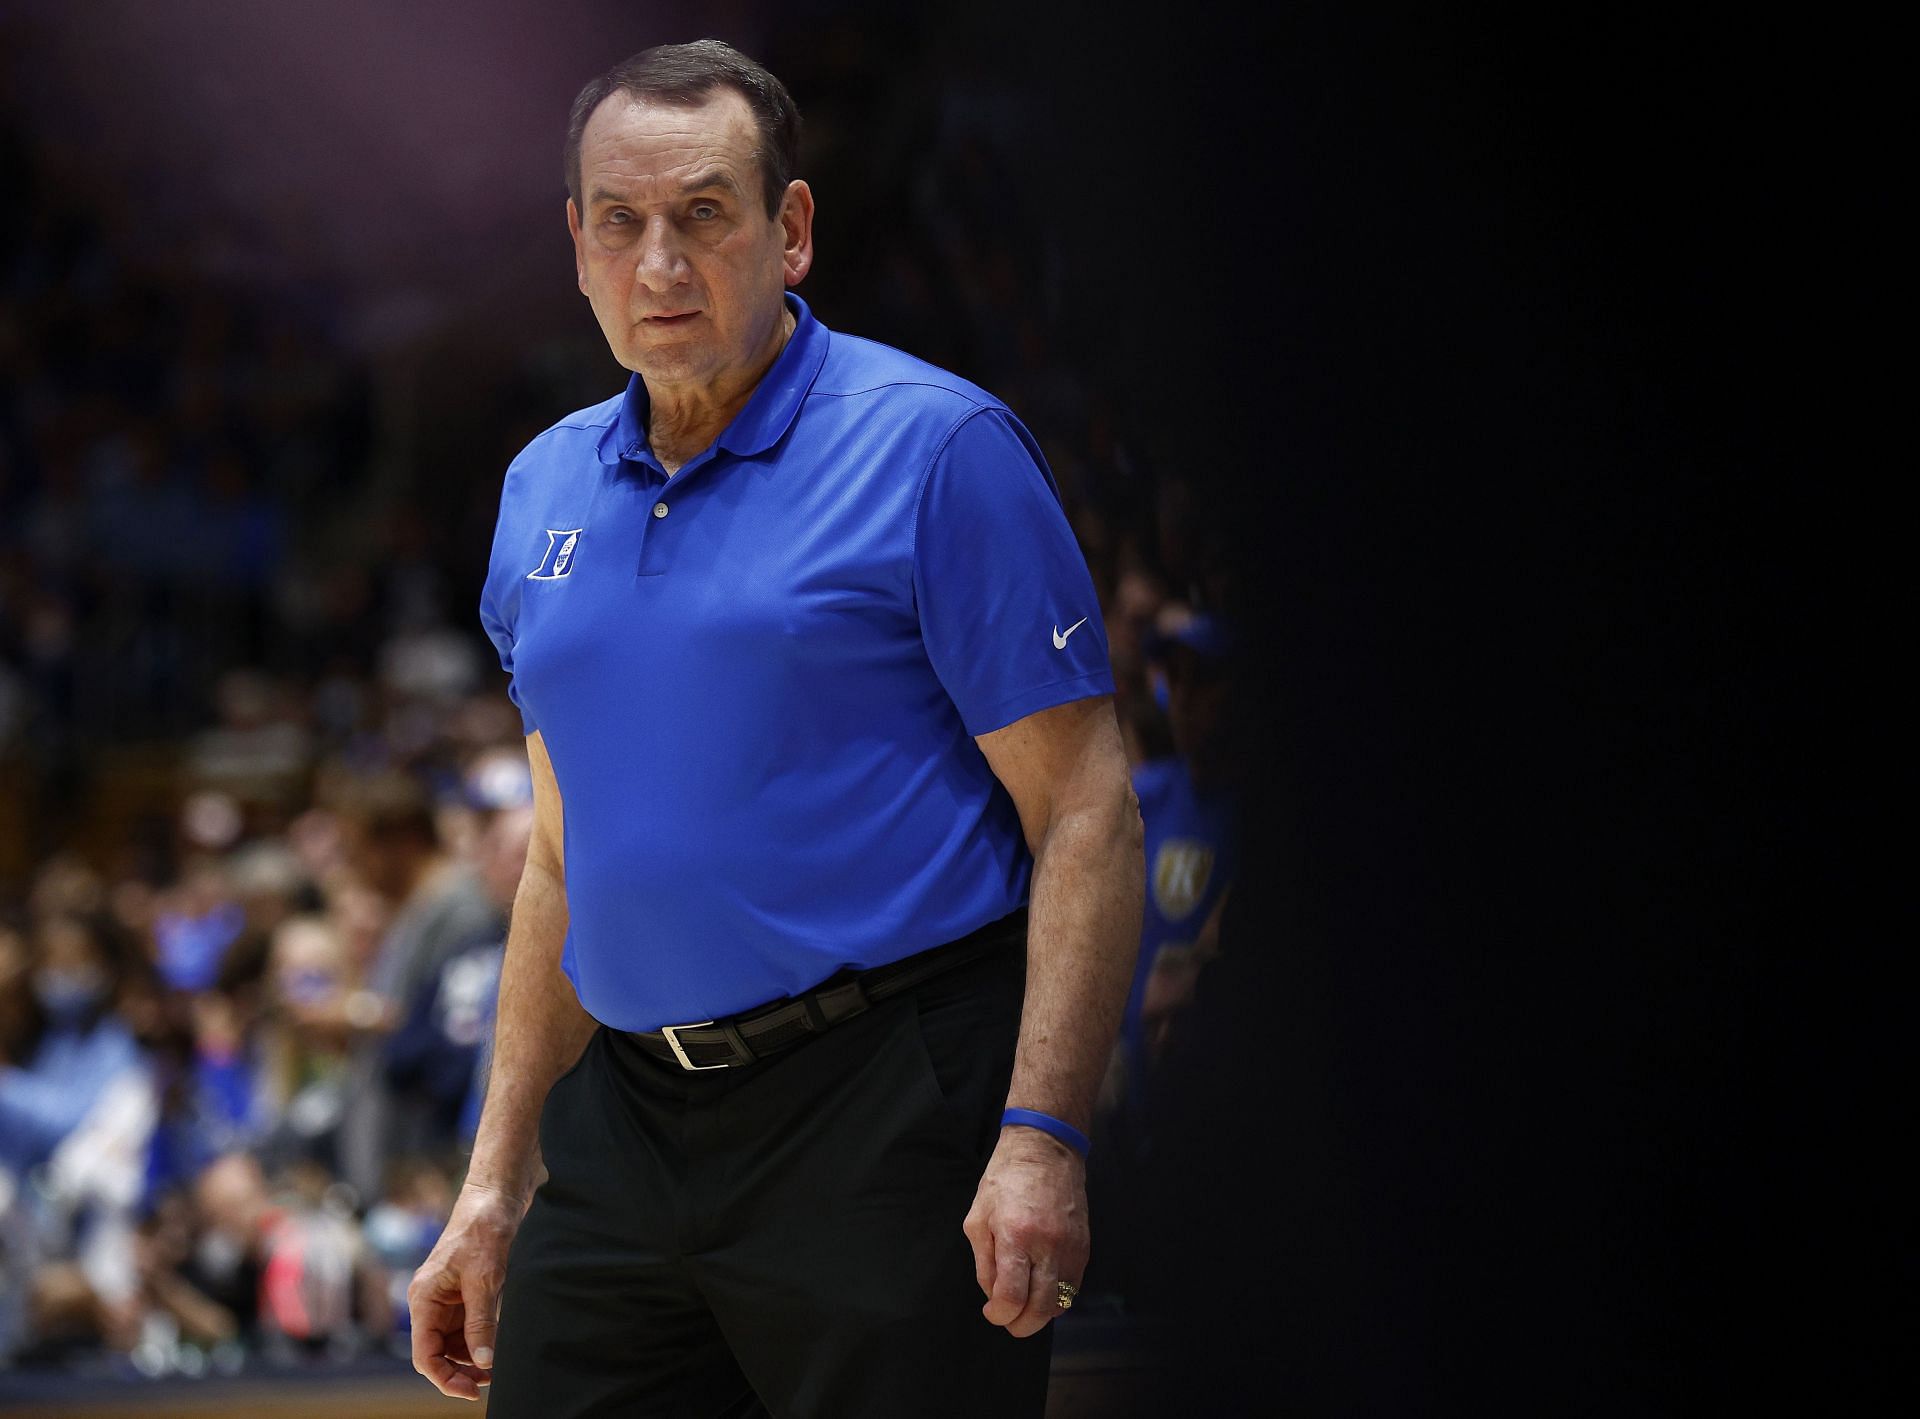 Duke coach Mike Krzyzewski is preparing for one last tournament as the Blue Devils coach.